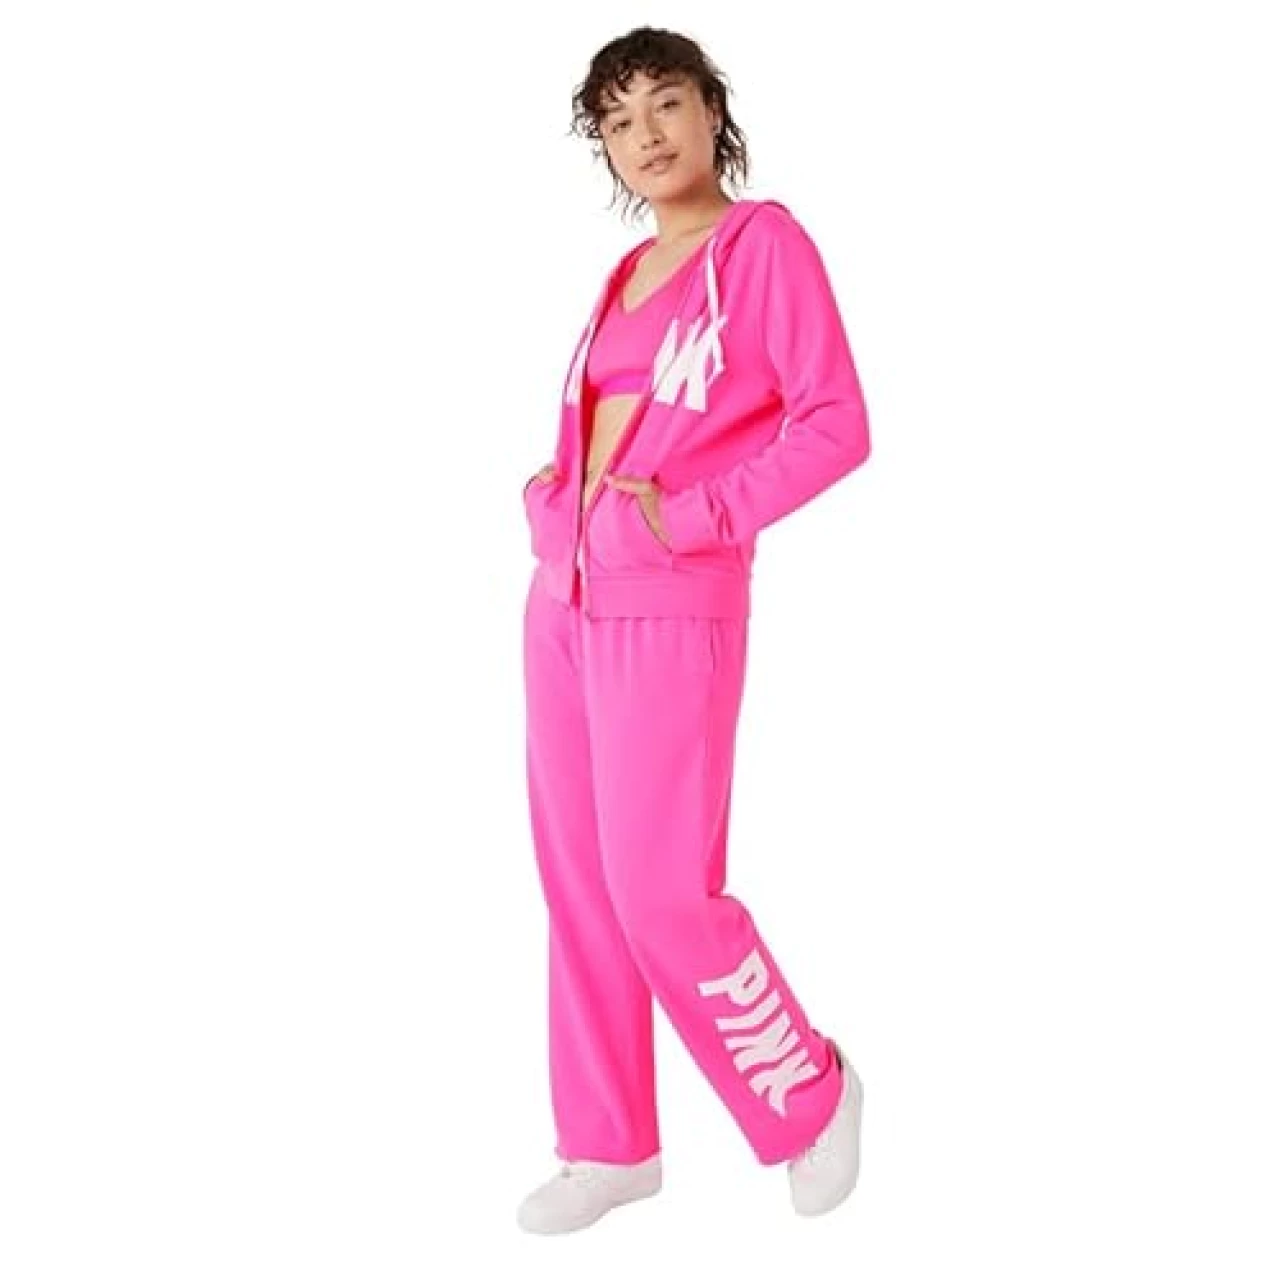 Victoria&rsquo;s Secret Pink Fleece Heritage Sweatpants, Women&rsquo;s Sweatpants, Pink (M)